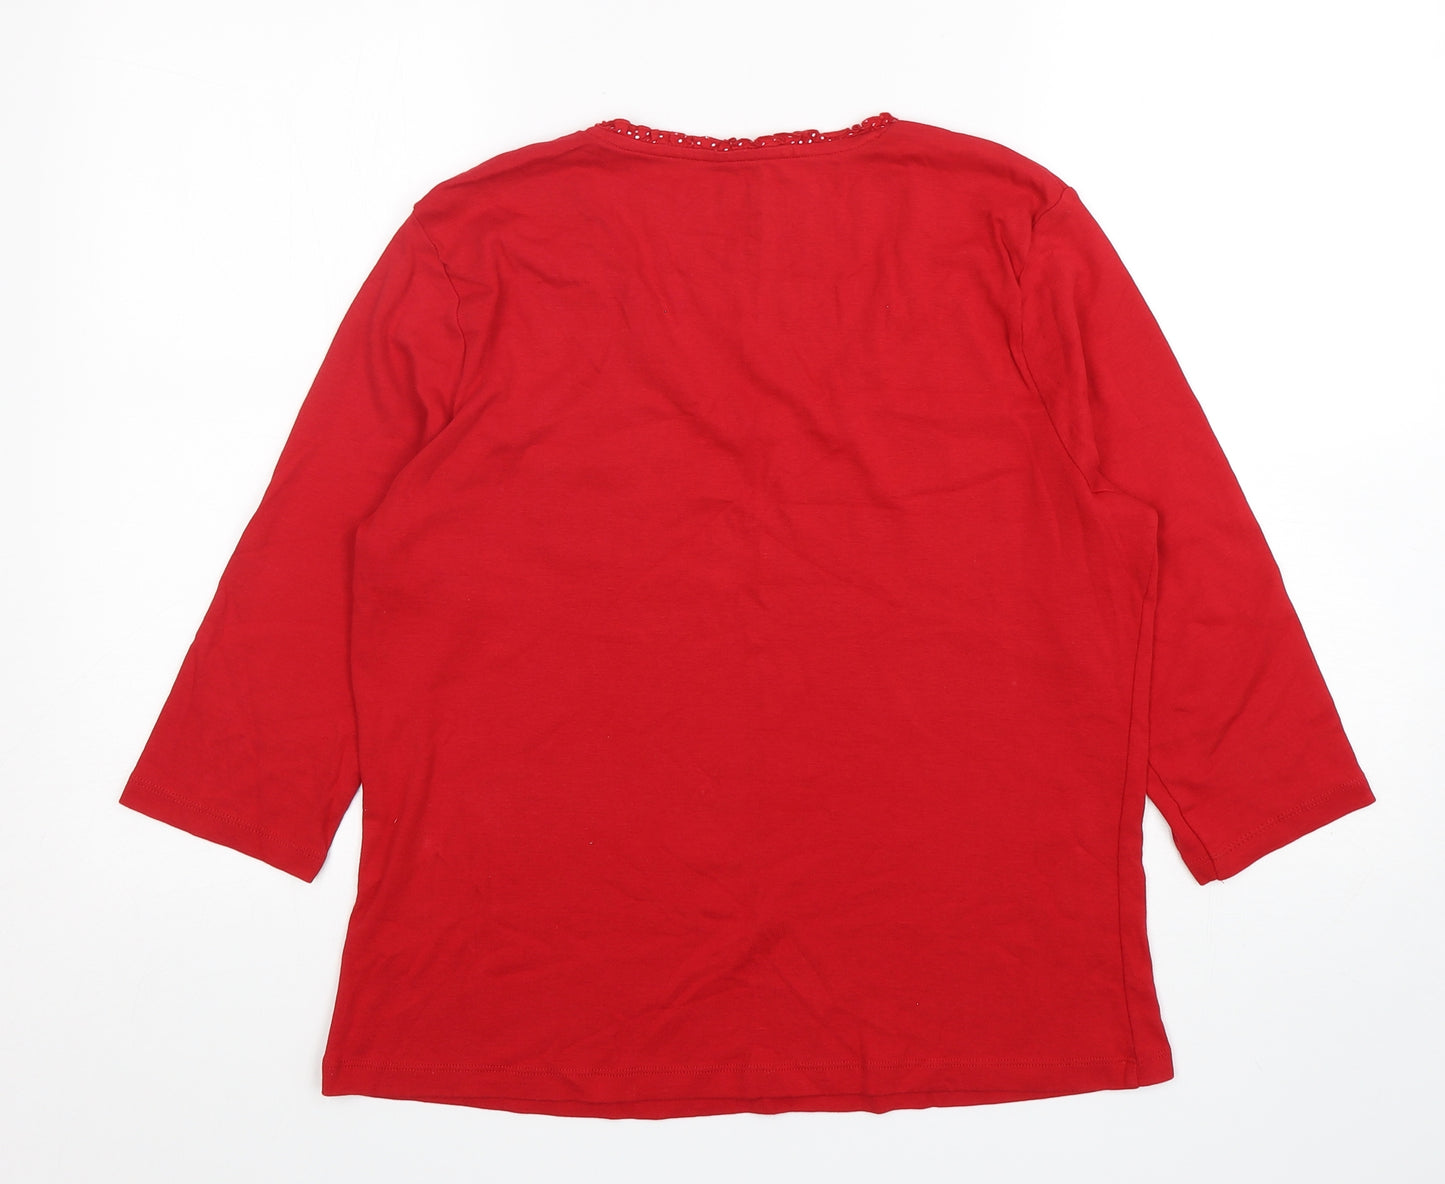 M&Co Womens Red Polka Dot Cotton Top Pyjama Top Size 2XL